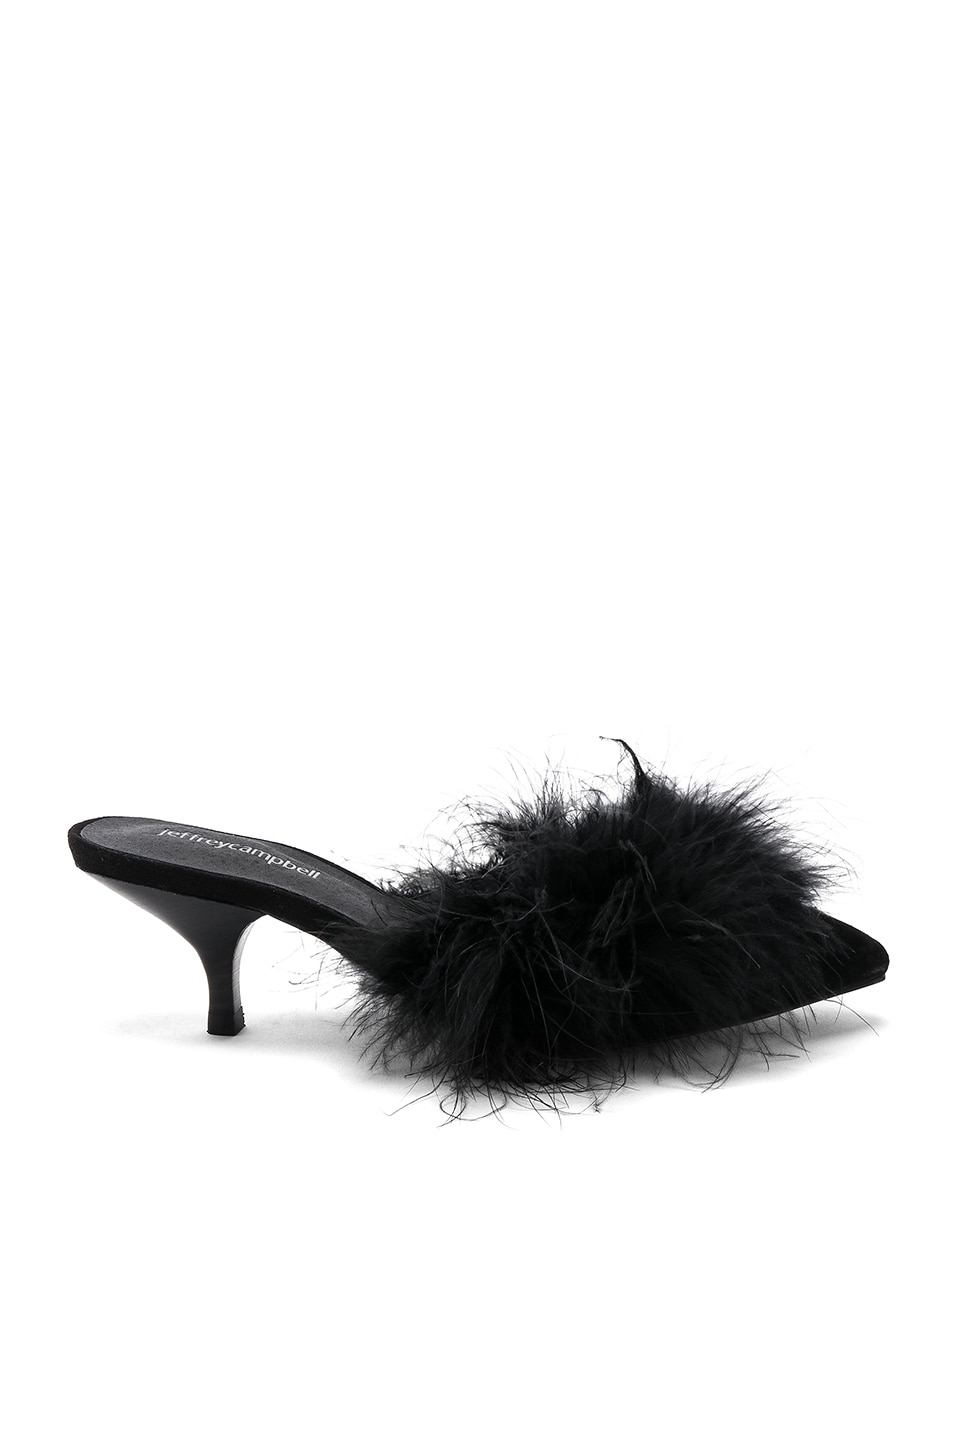 jeffrey campbell feather heels